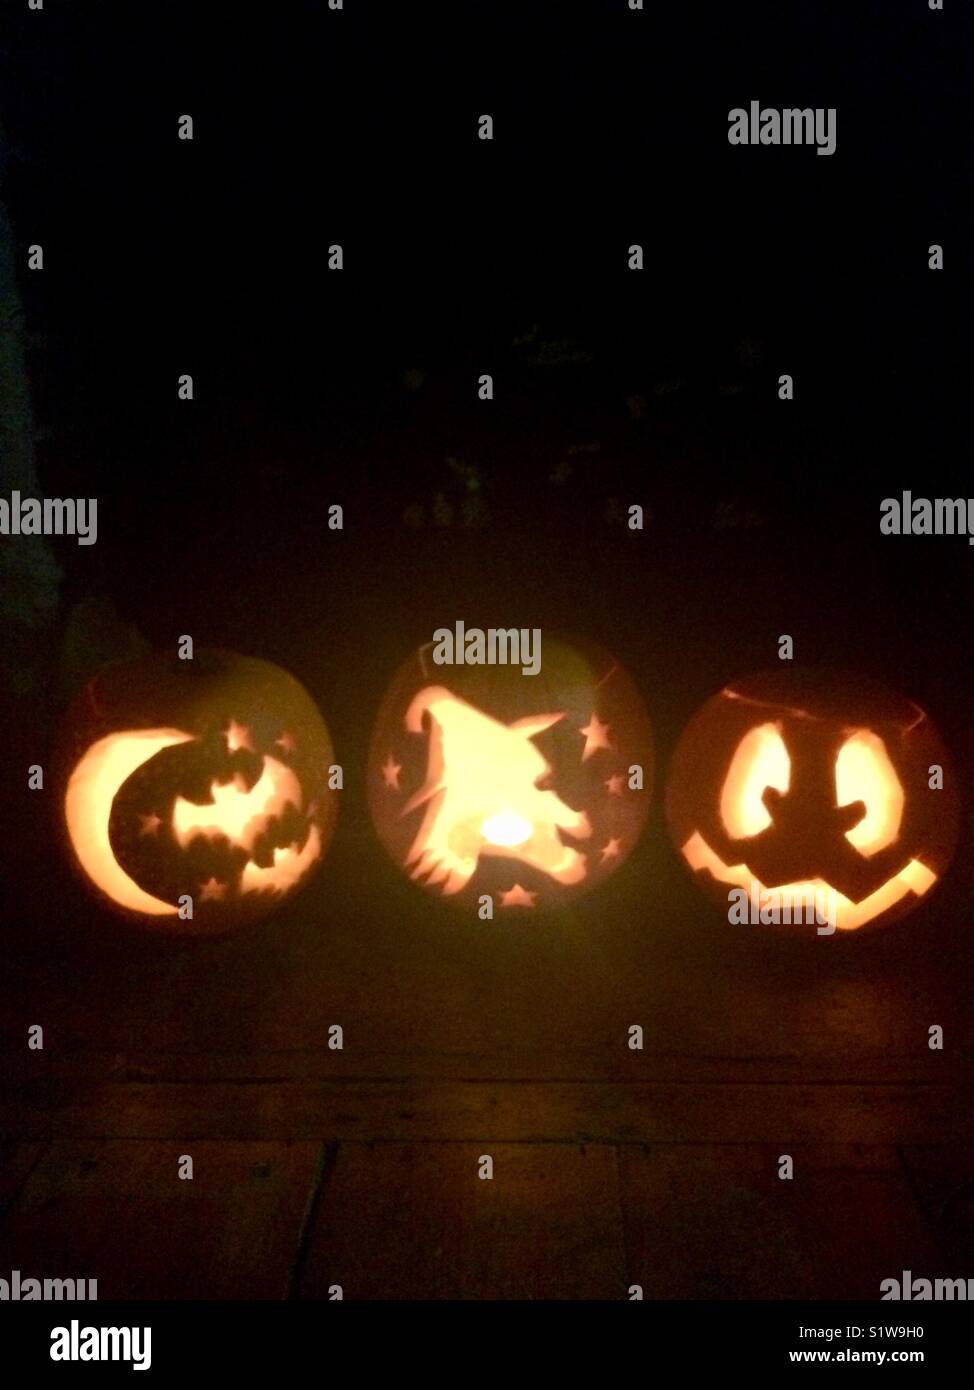 Three Halloween pumpkins in a row Stock Photo - Alamy